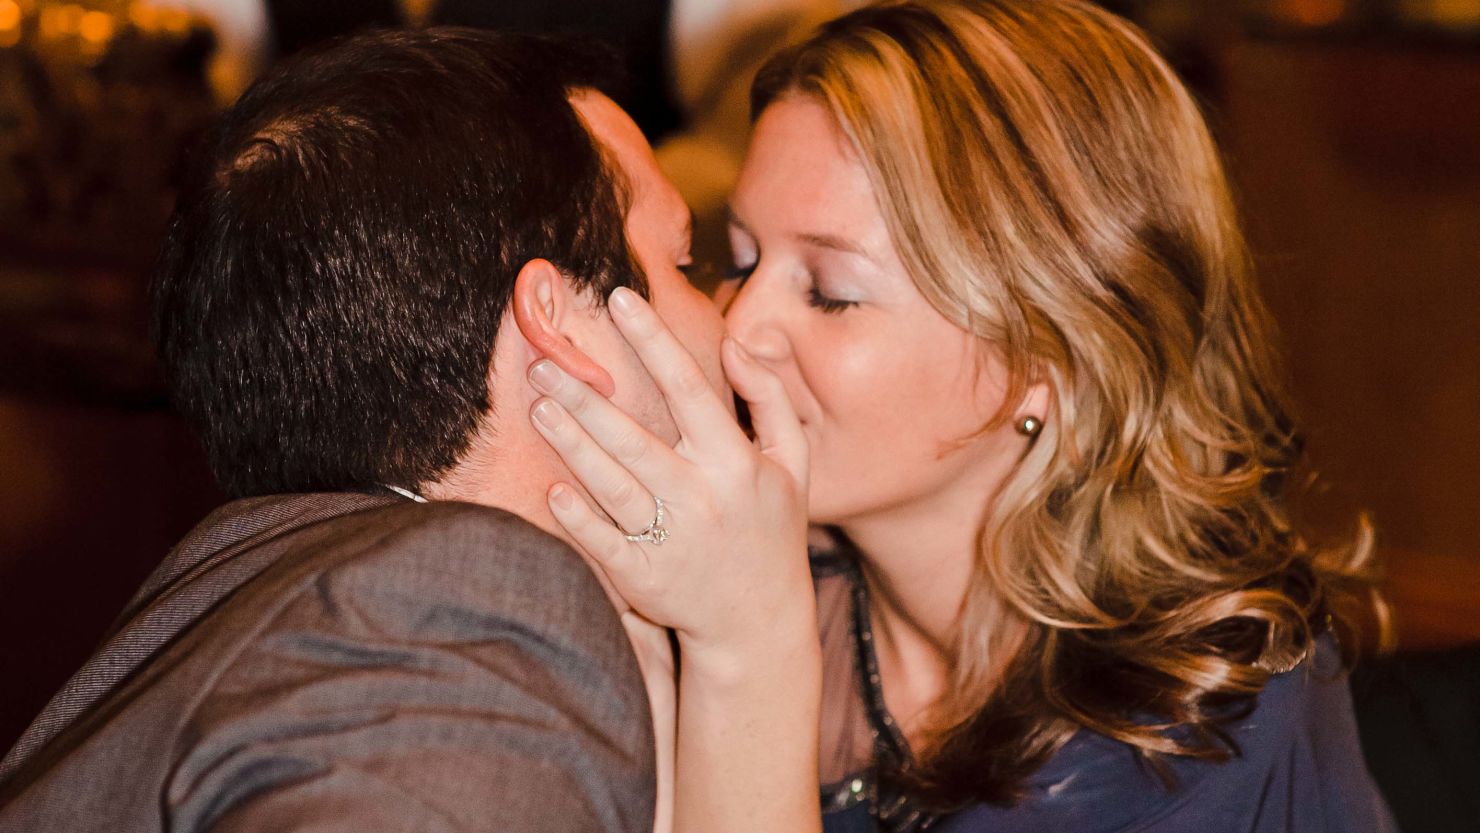 Stephanie Hayden's then-boyfriend, Chad, proposed to her in public at the Waldorf Astoria in New York.